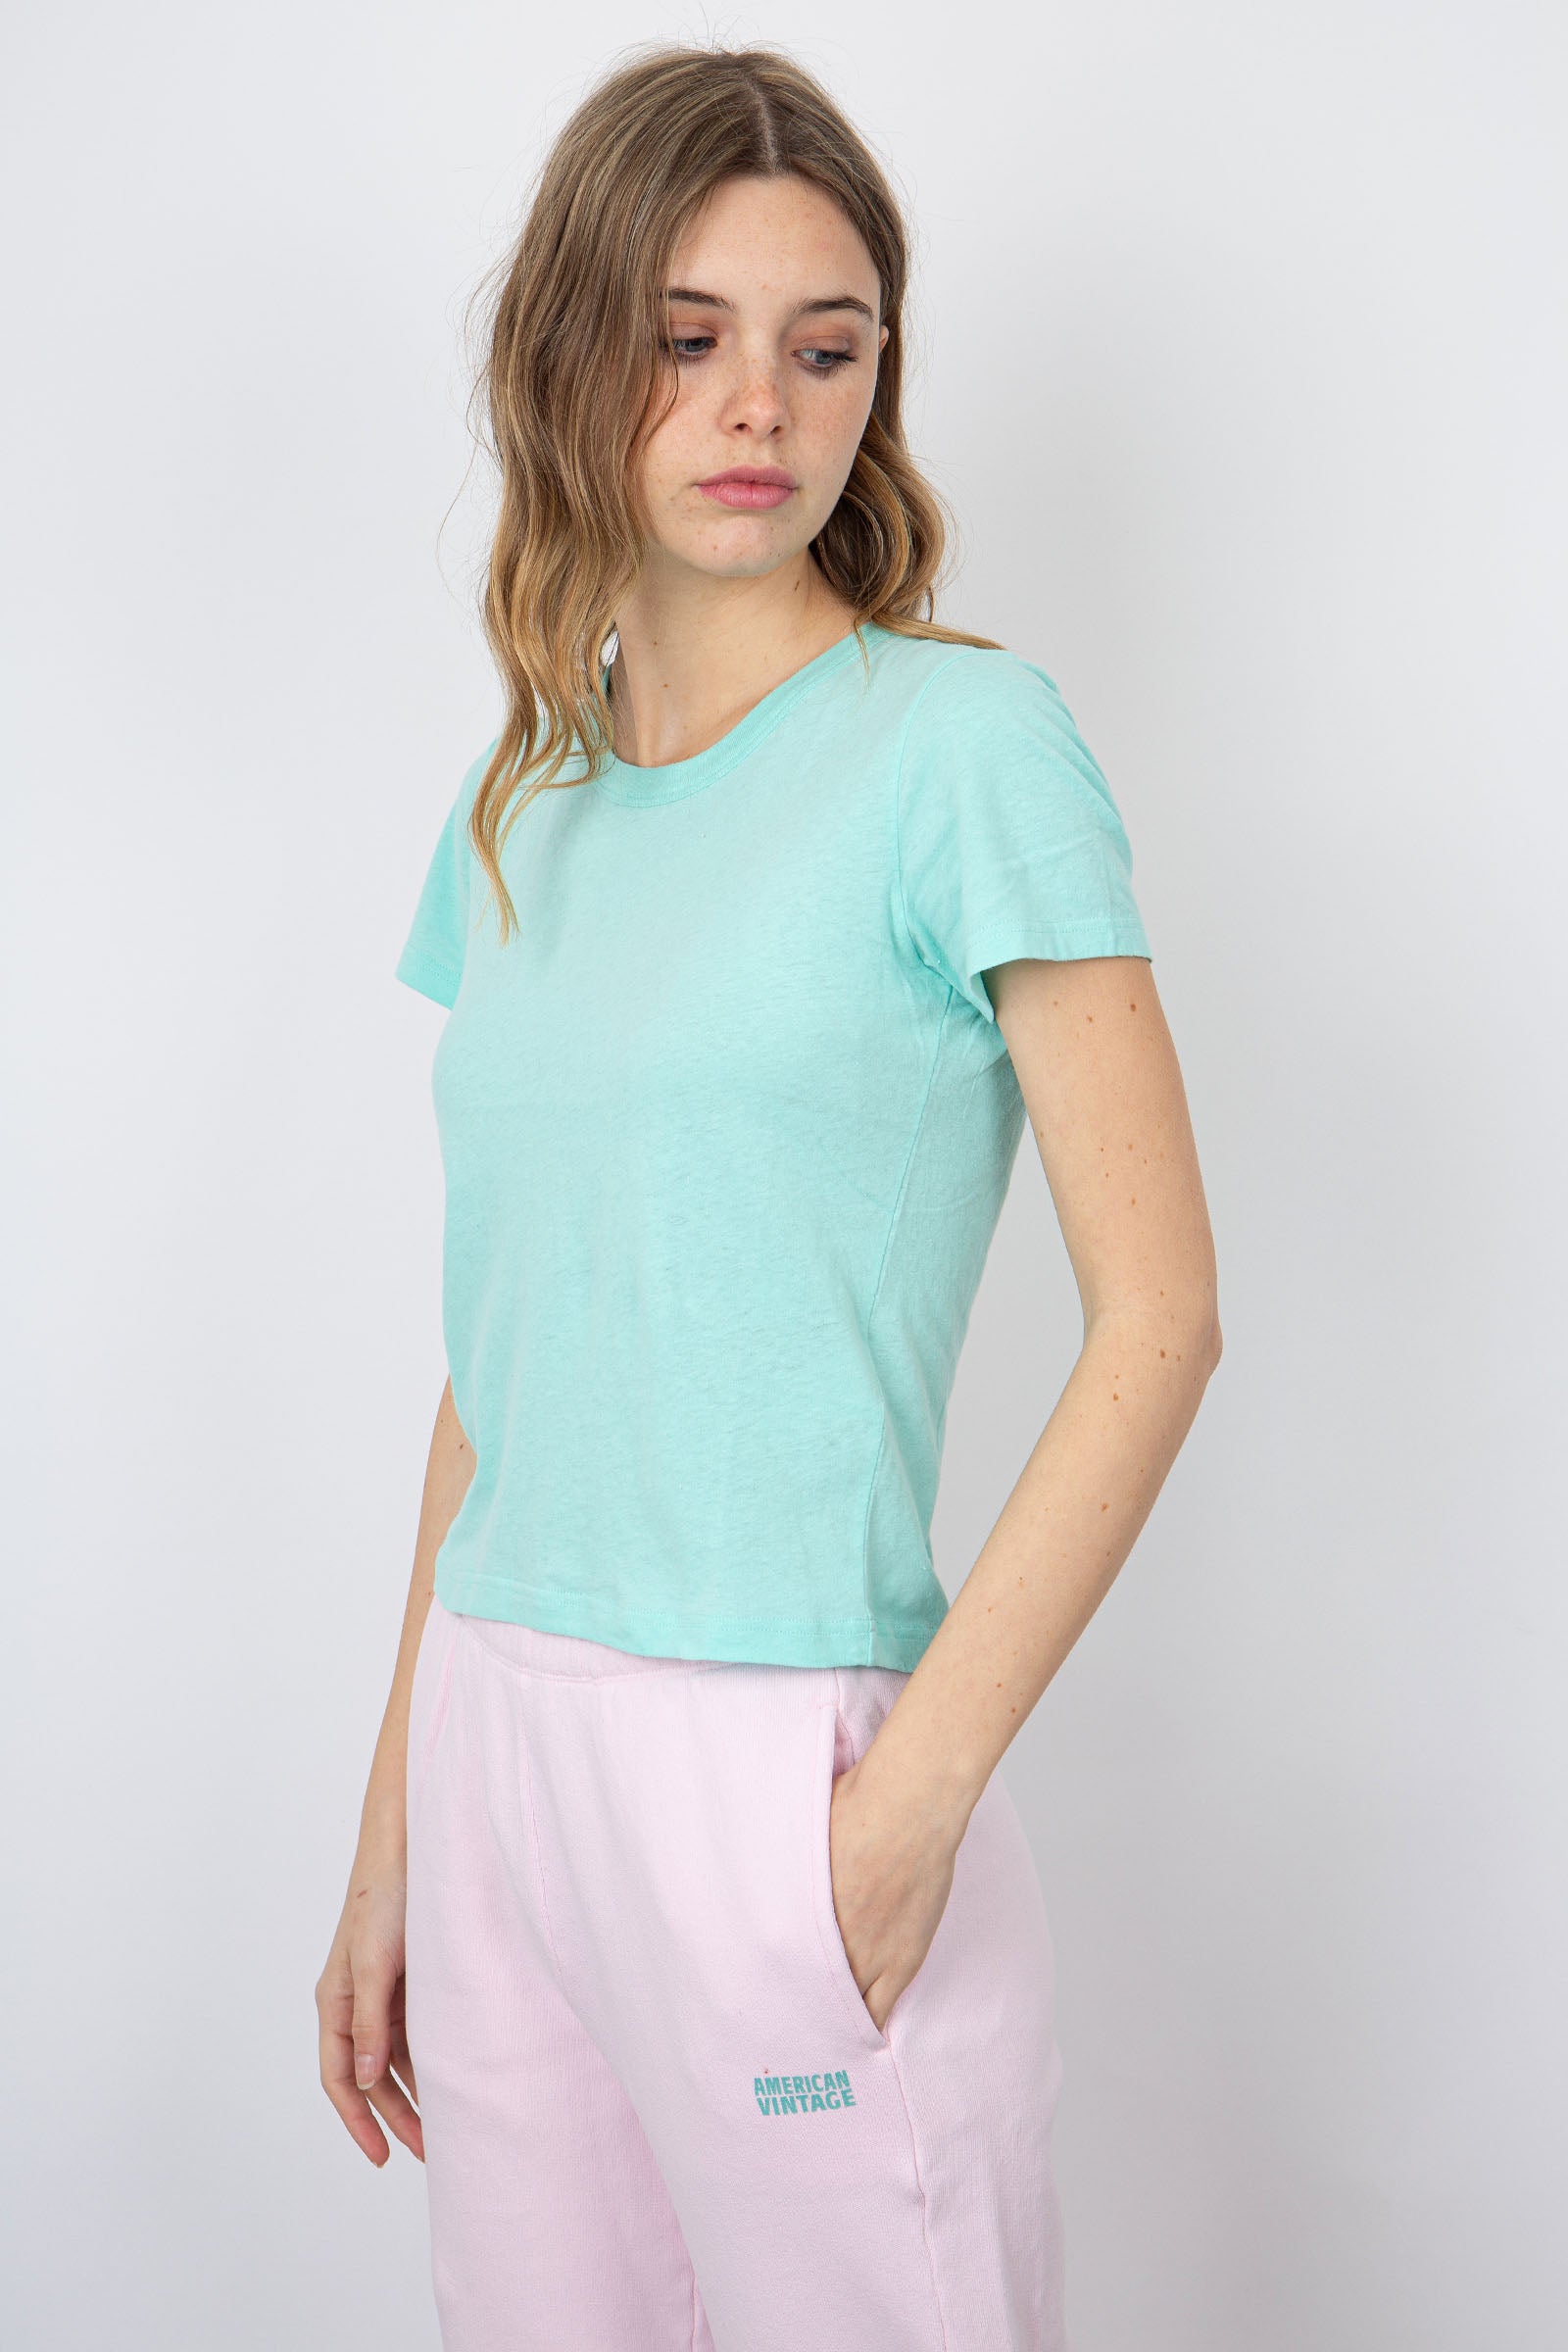 American Vintage T-Shirt Gamipy Cotton Aqua Green - 3